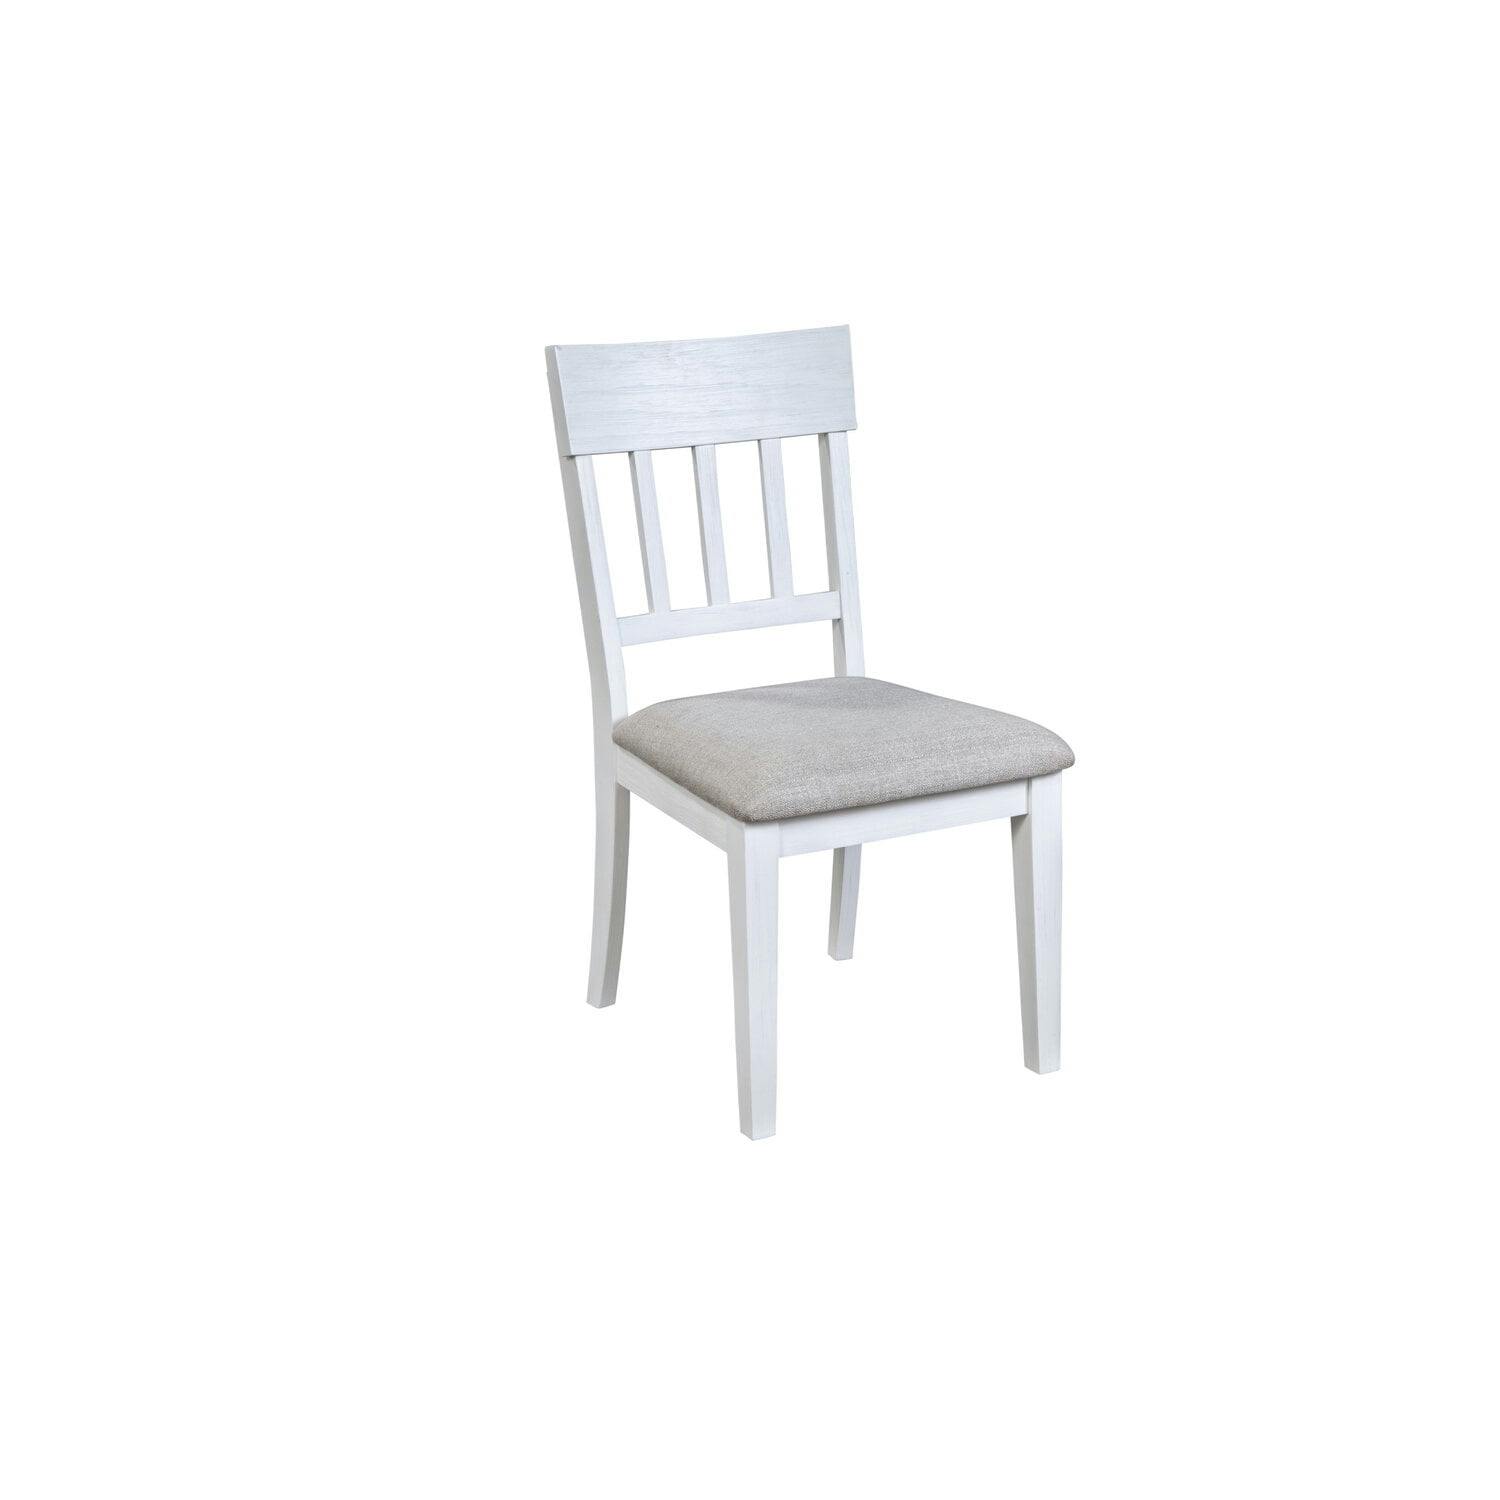 Transitional Slat-Back Upholstered Side Chair in Mystic White